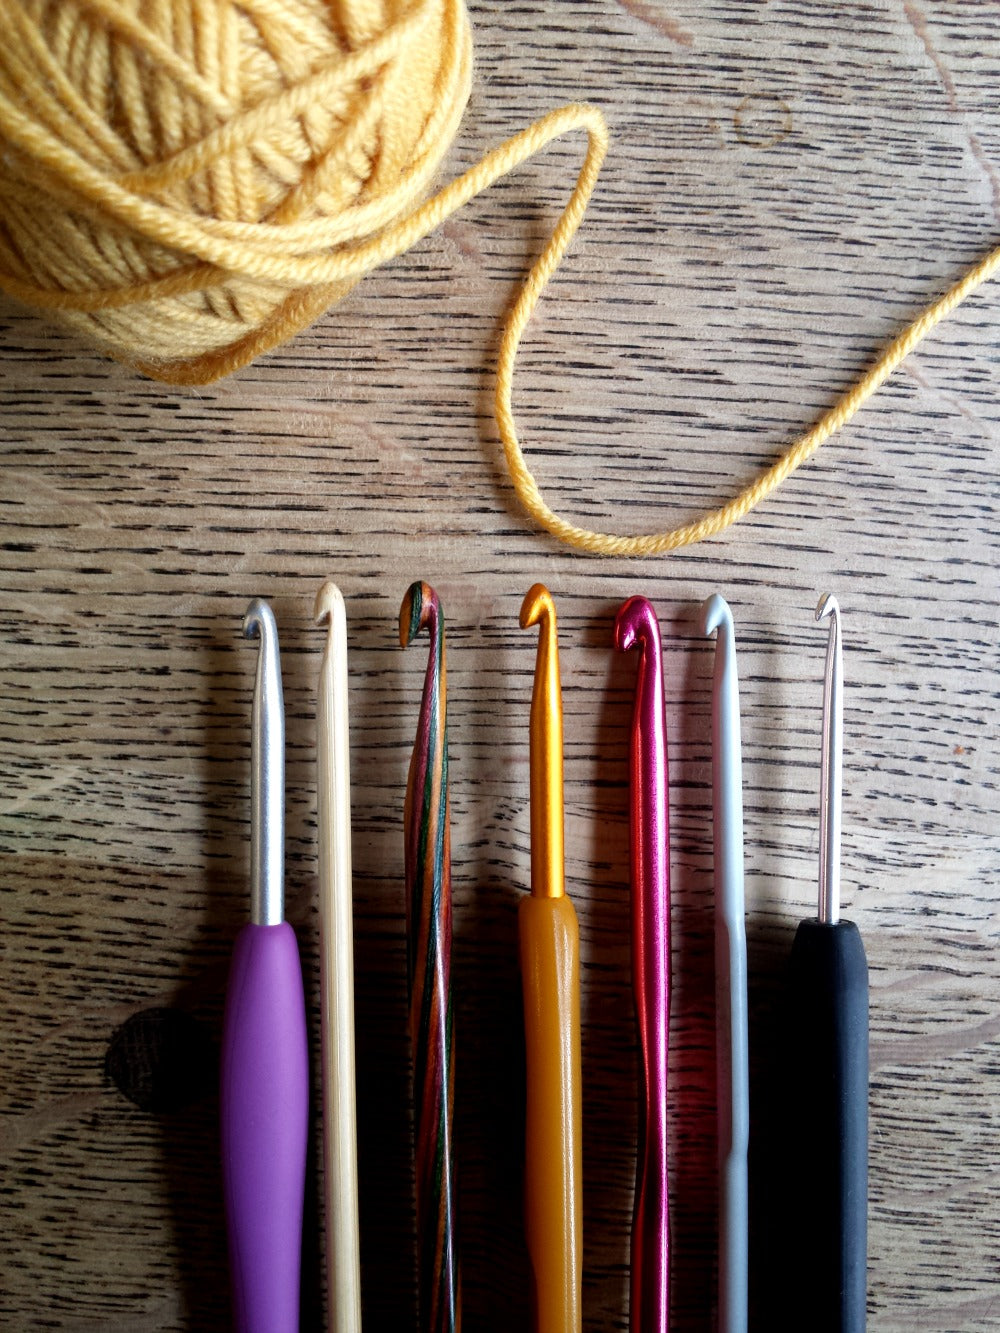 a range of crochet hooks and a ball of yarn